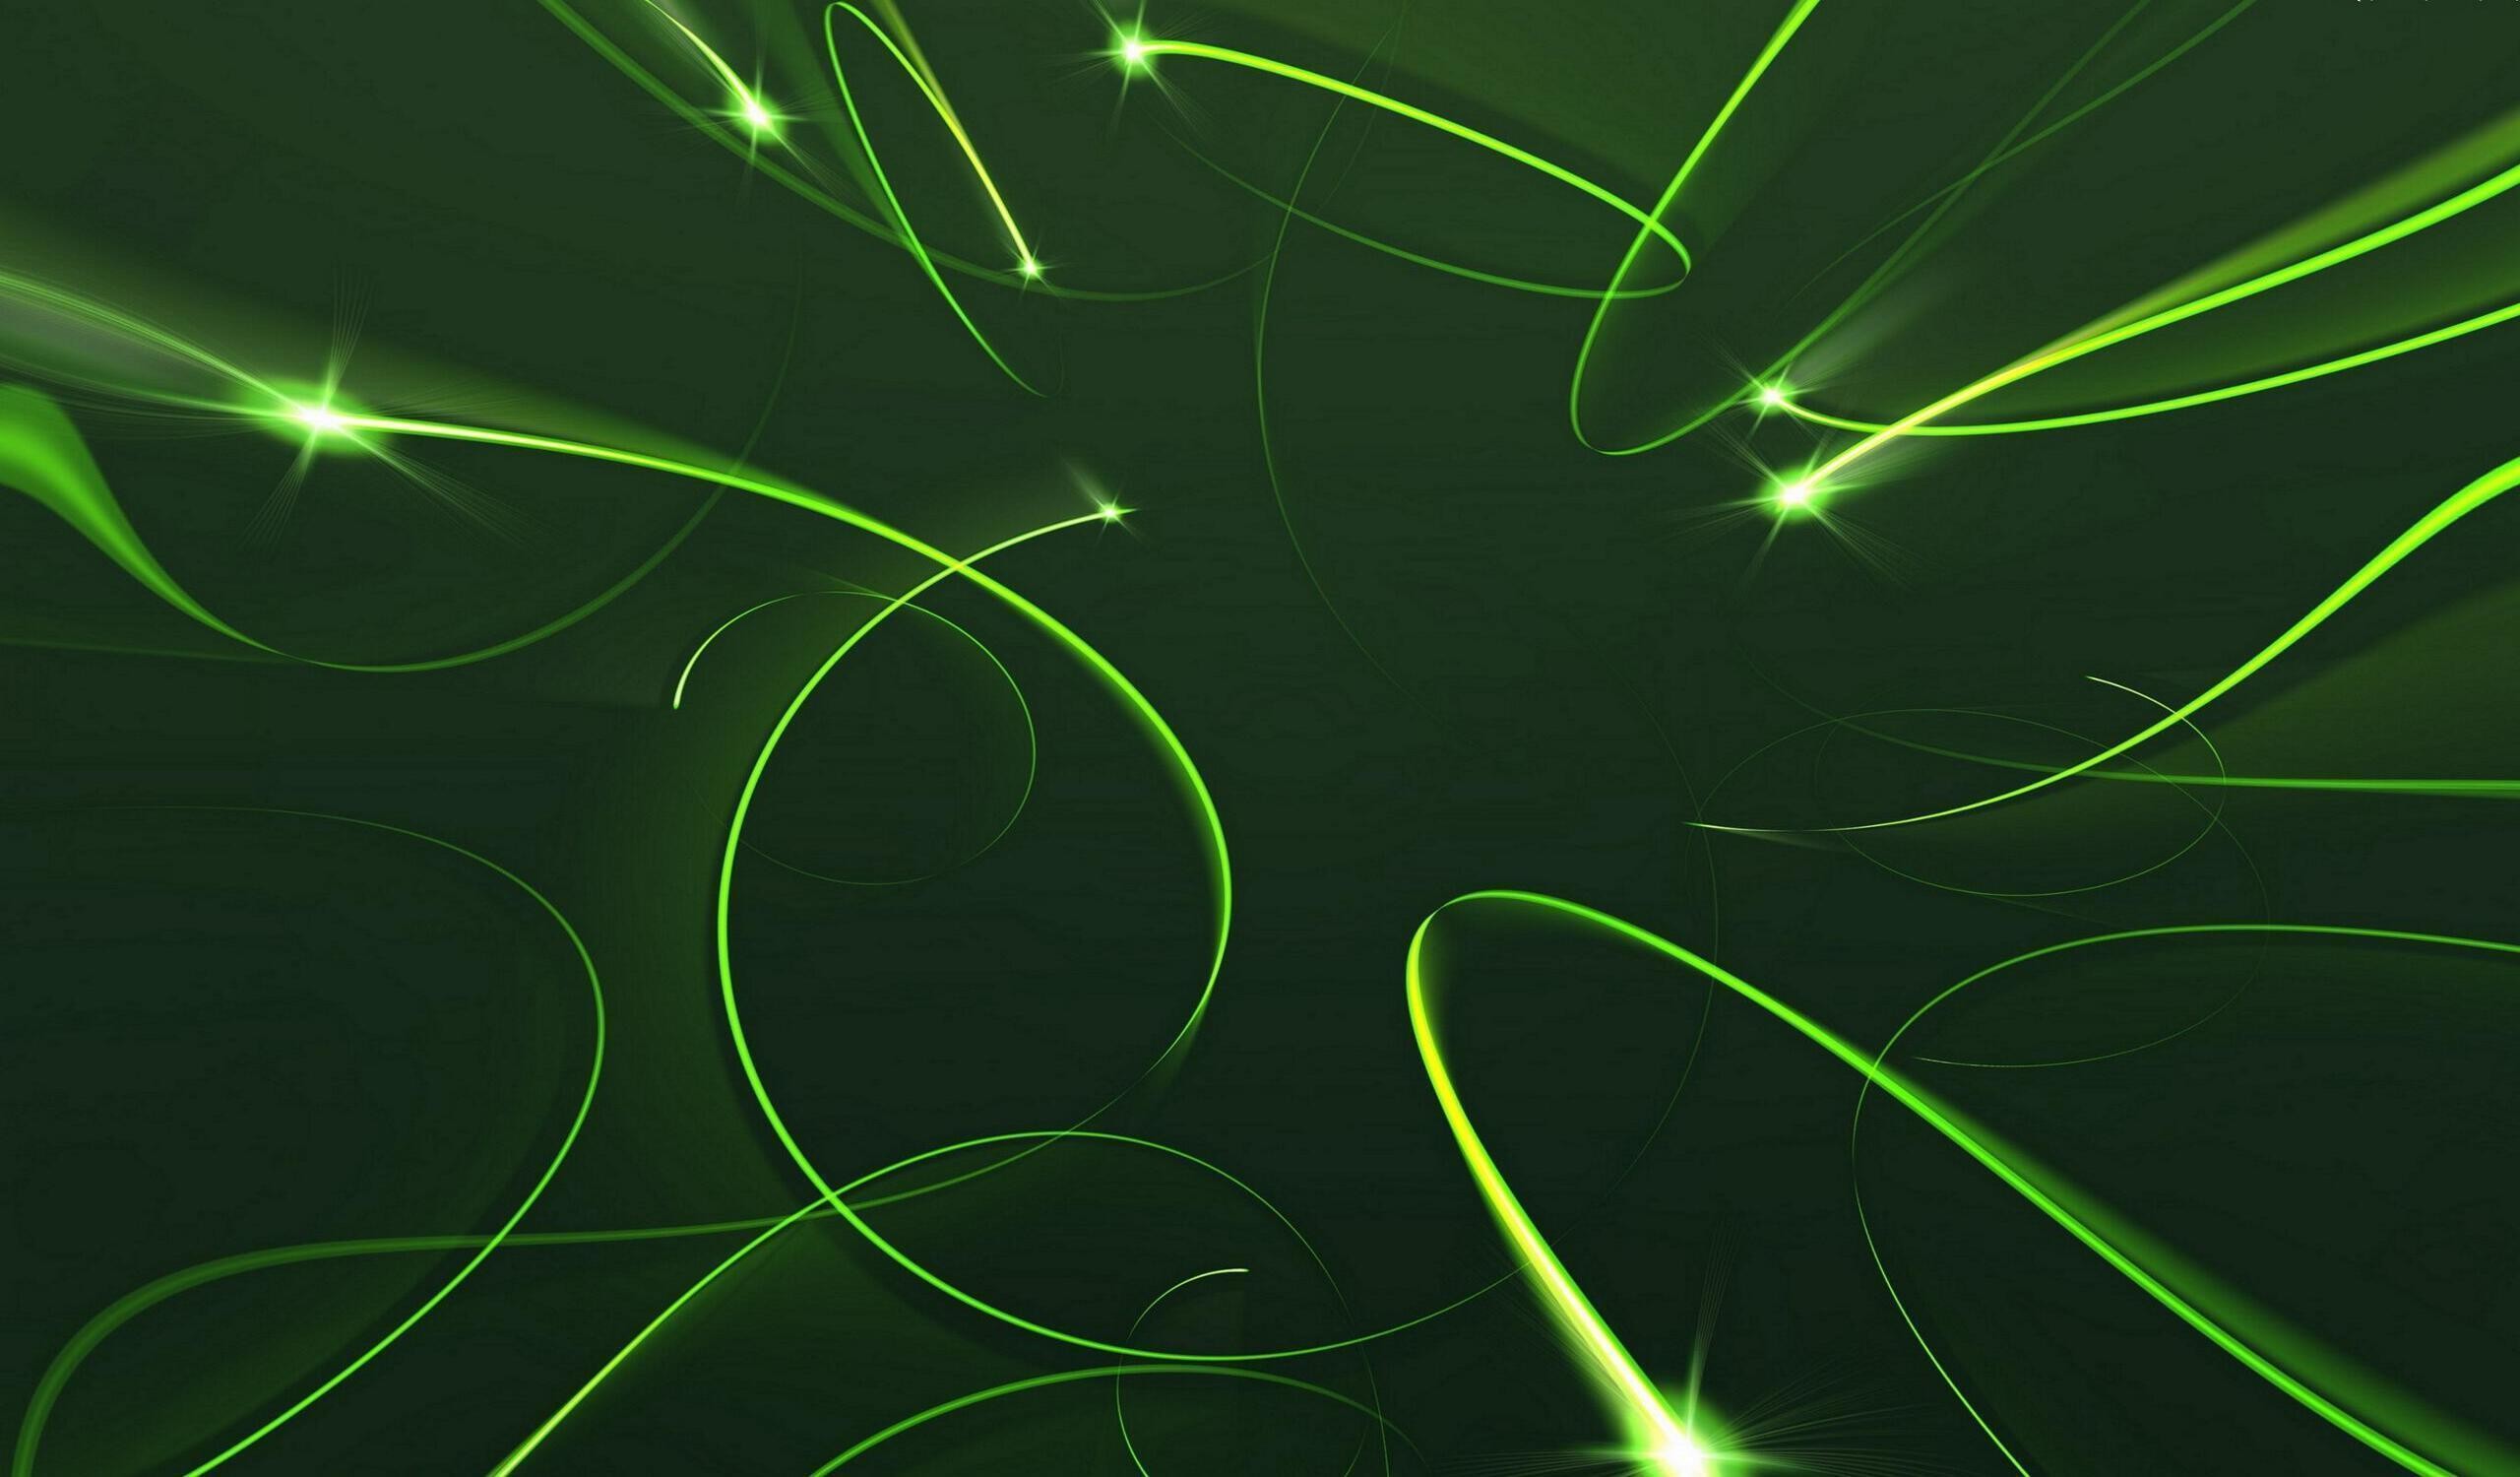 Dark Green Abstract Backgrounds Hd Desktop 10 HD Wallpapers .